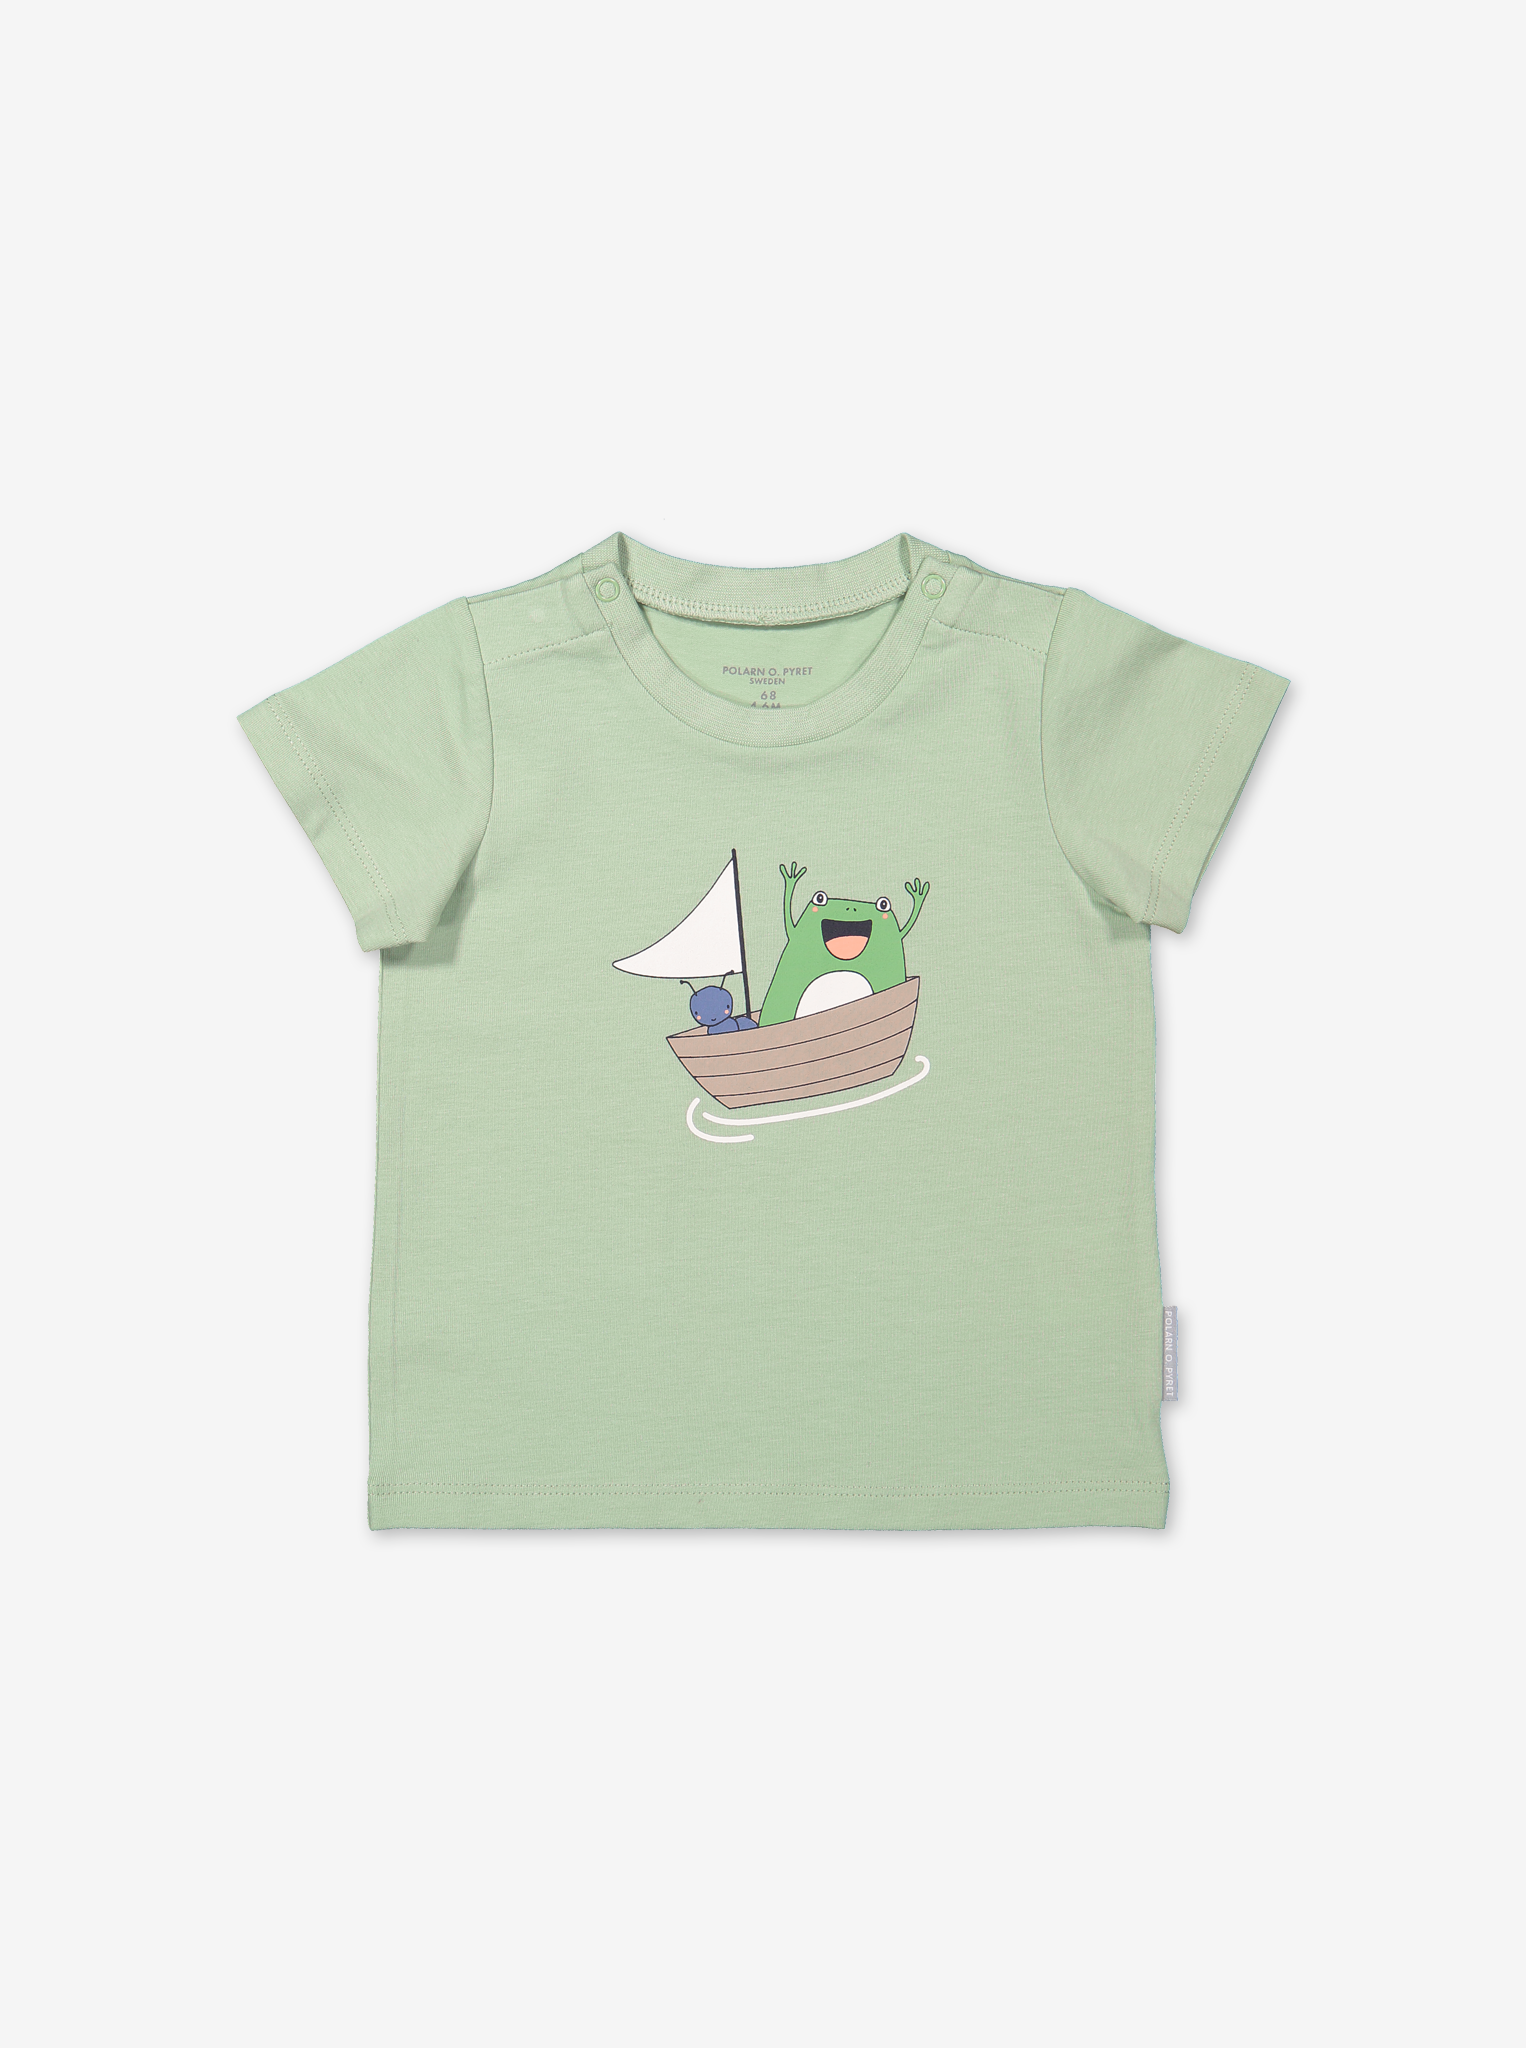 Organic Baby T-Shirt-Unisex-2m-1y-Green